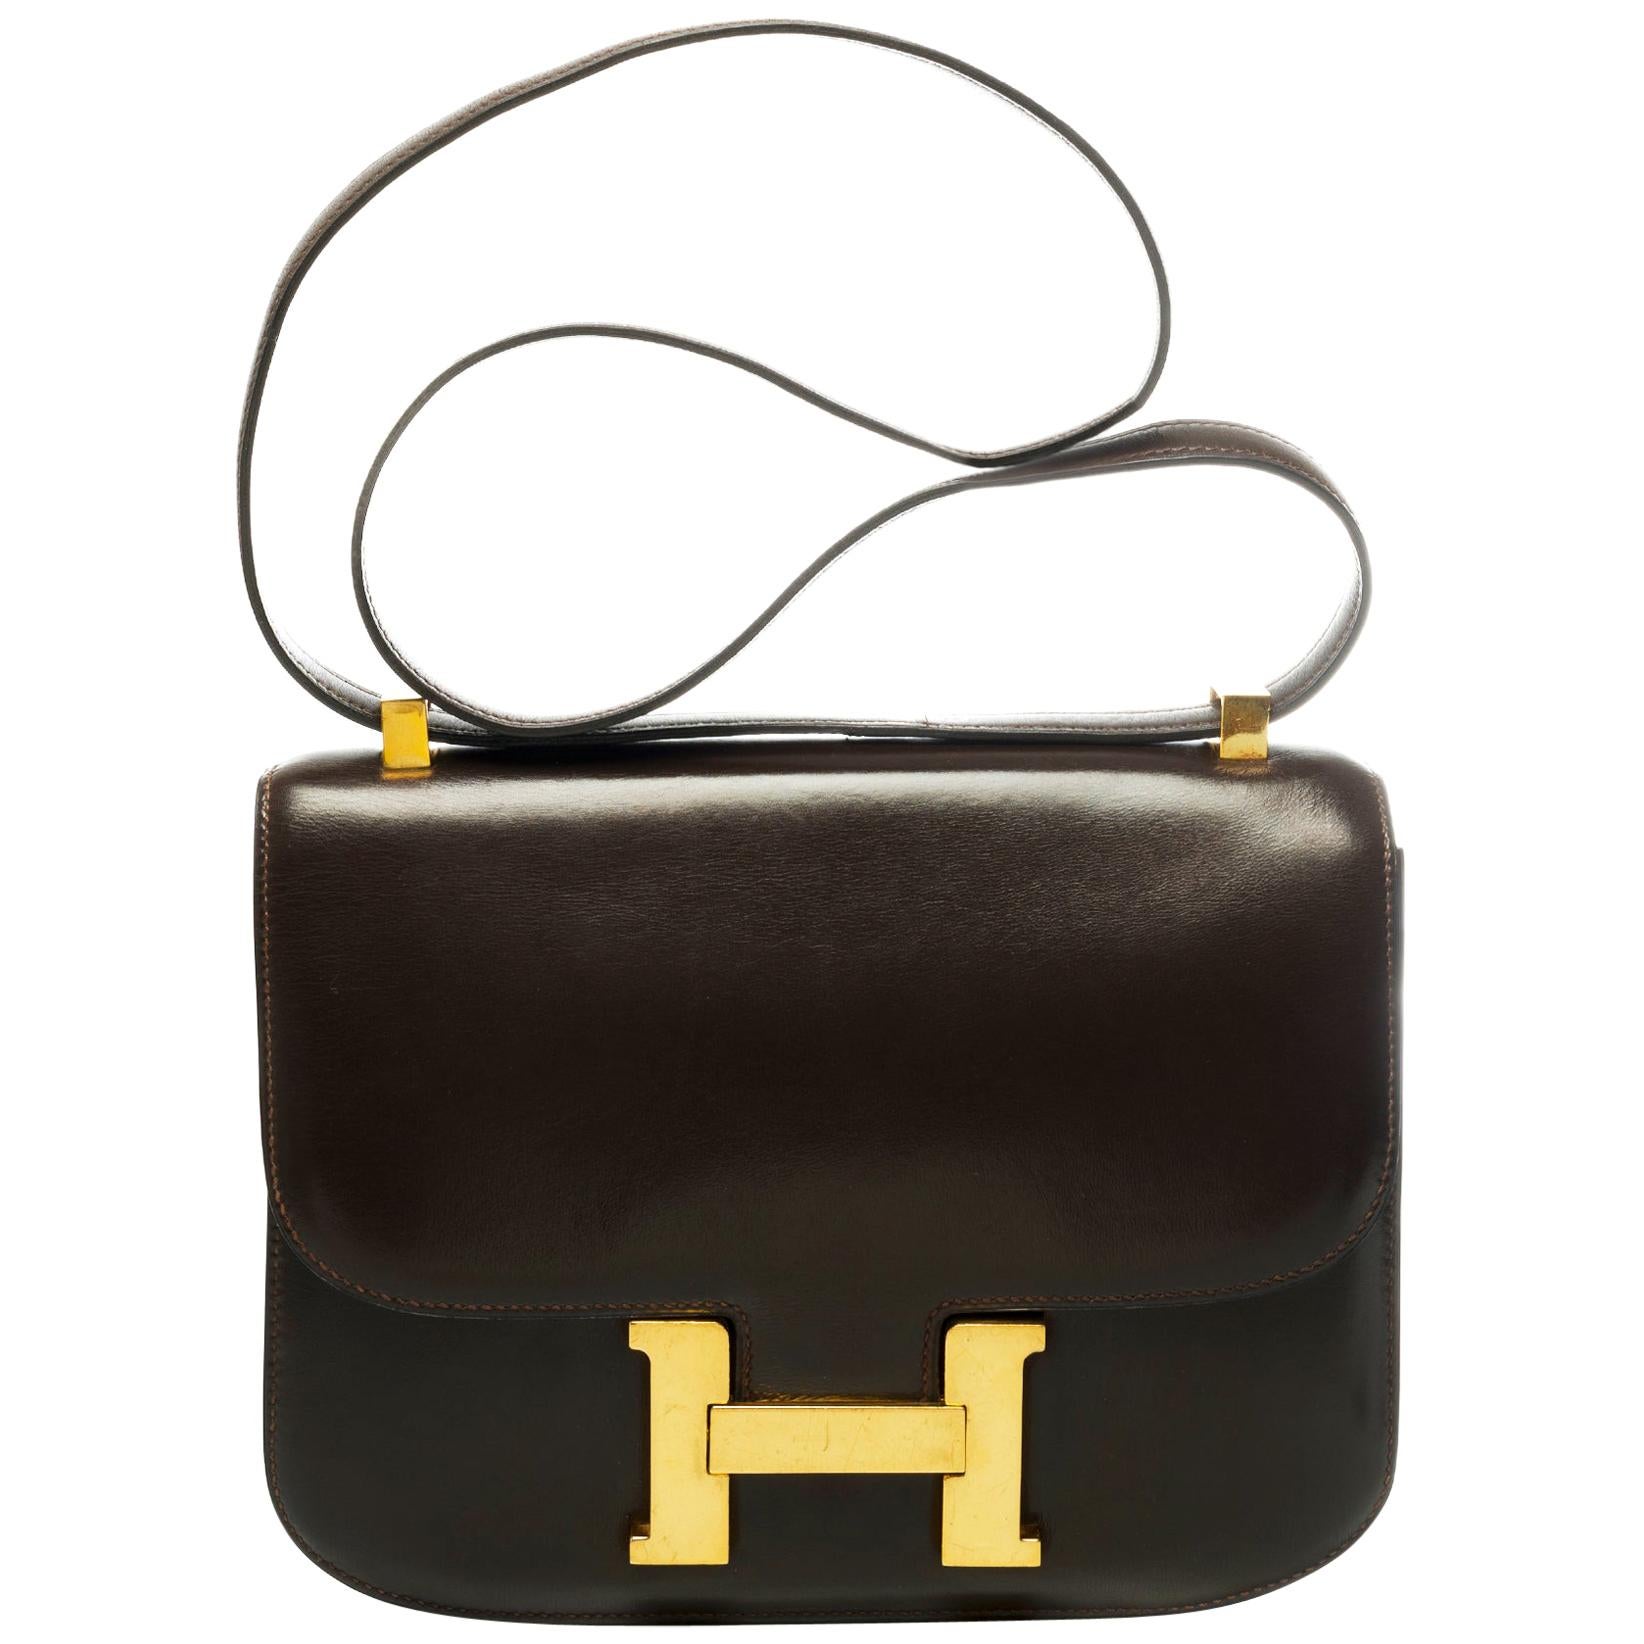 Rare Hermes Constance 23 shoulder bag in brown calfskin with gold hardware !